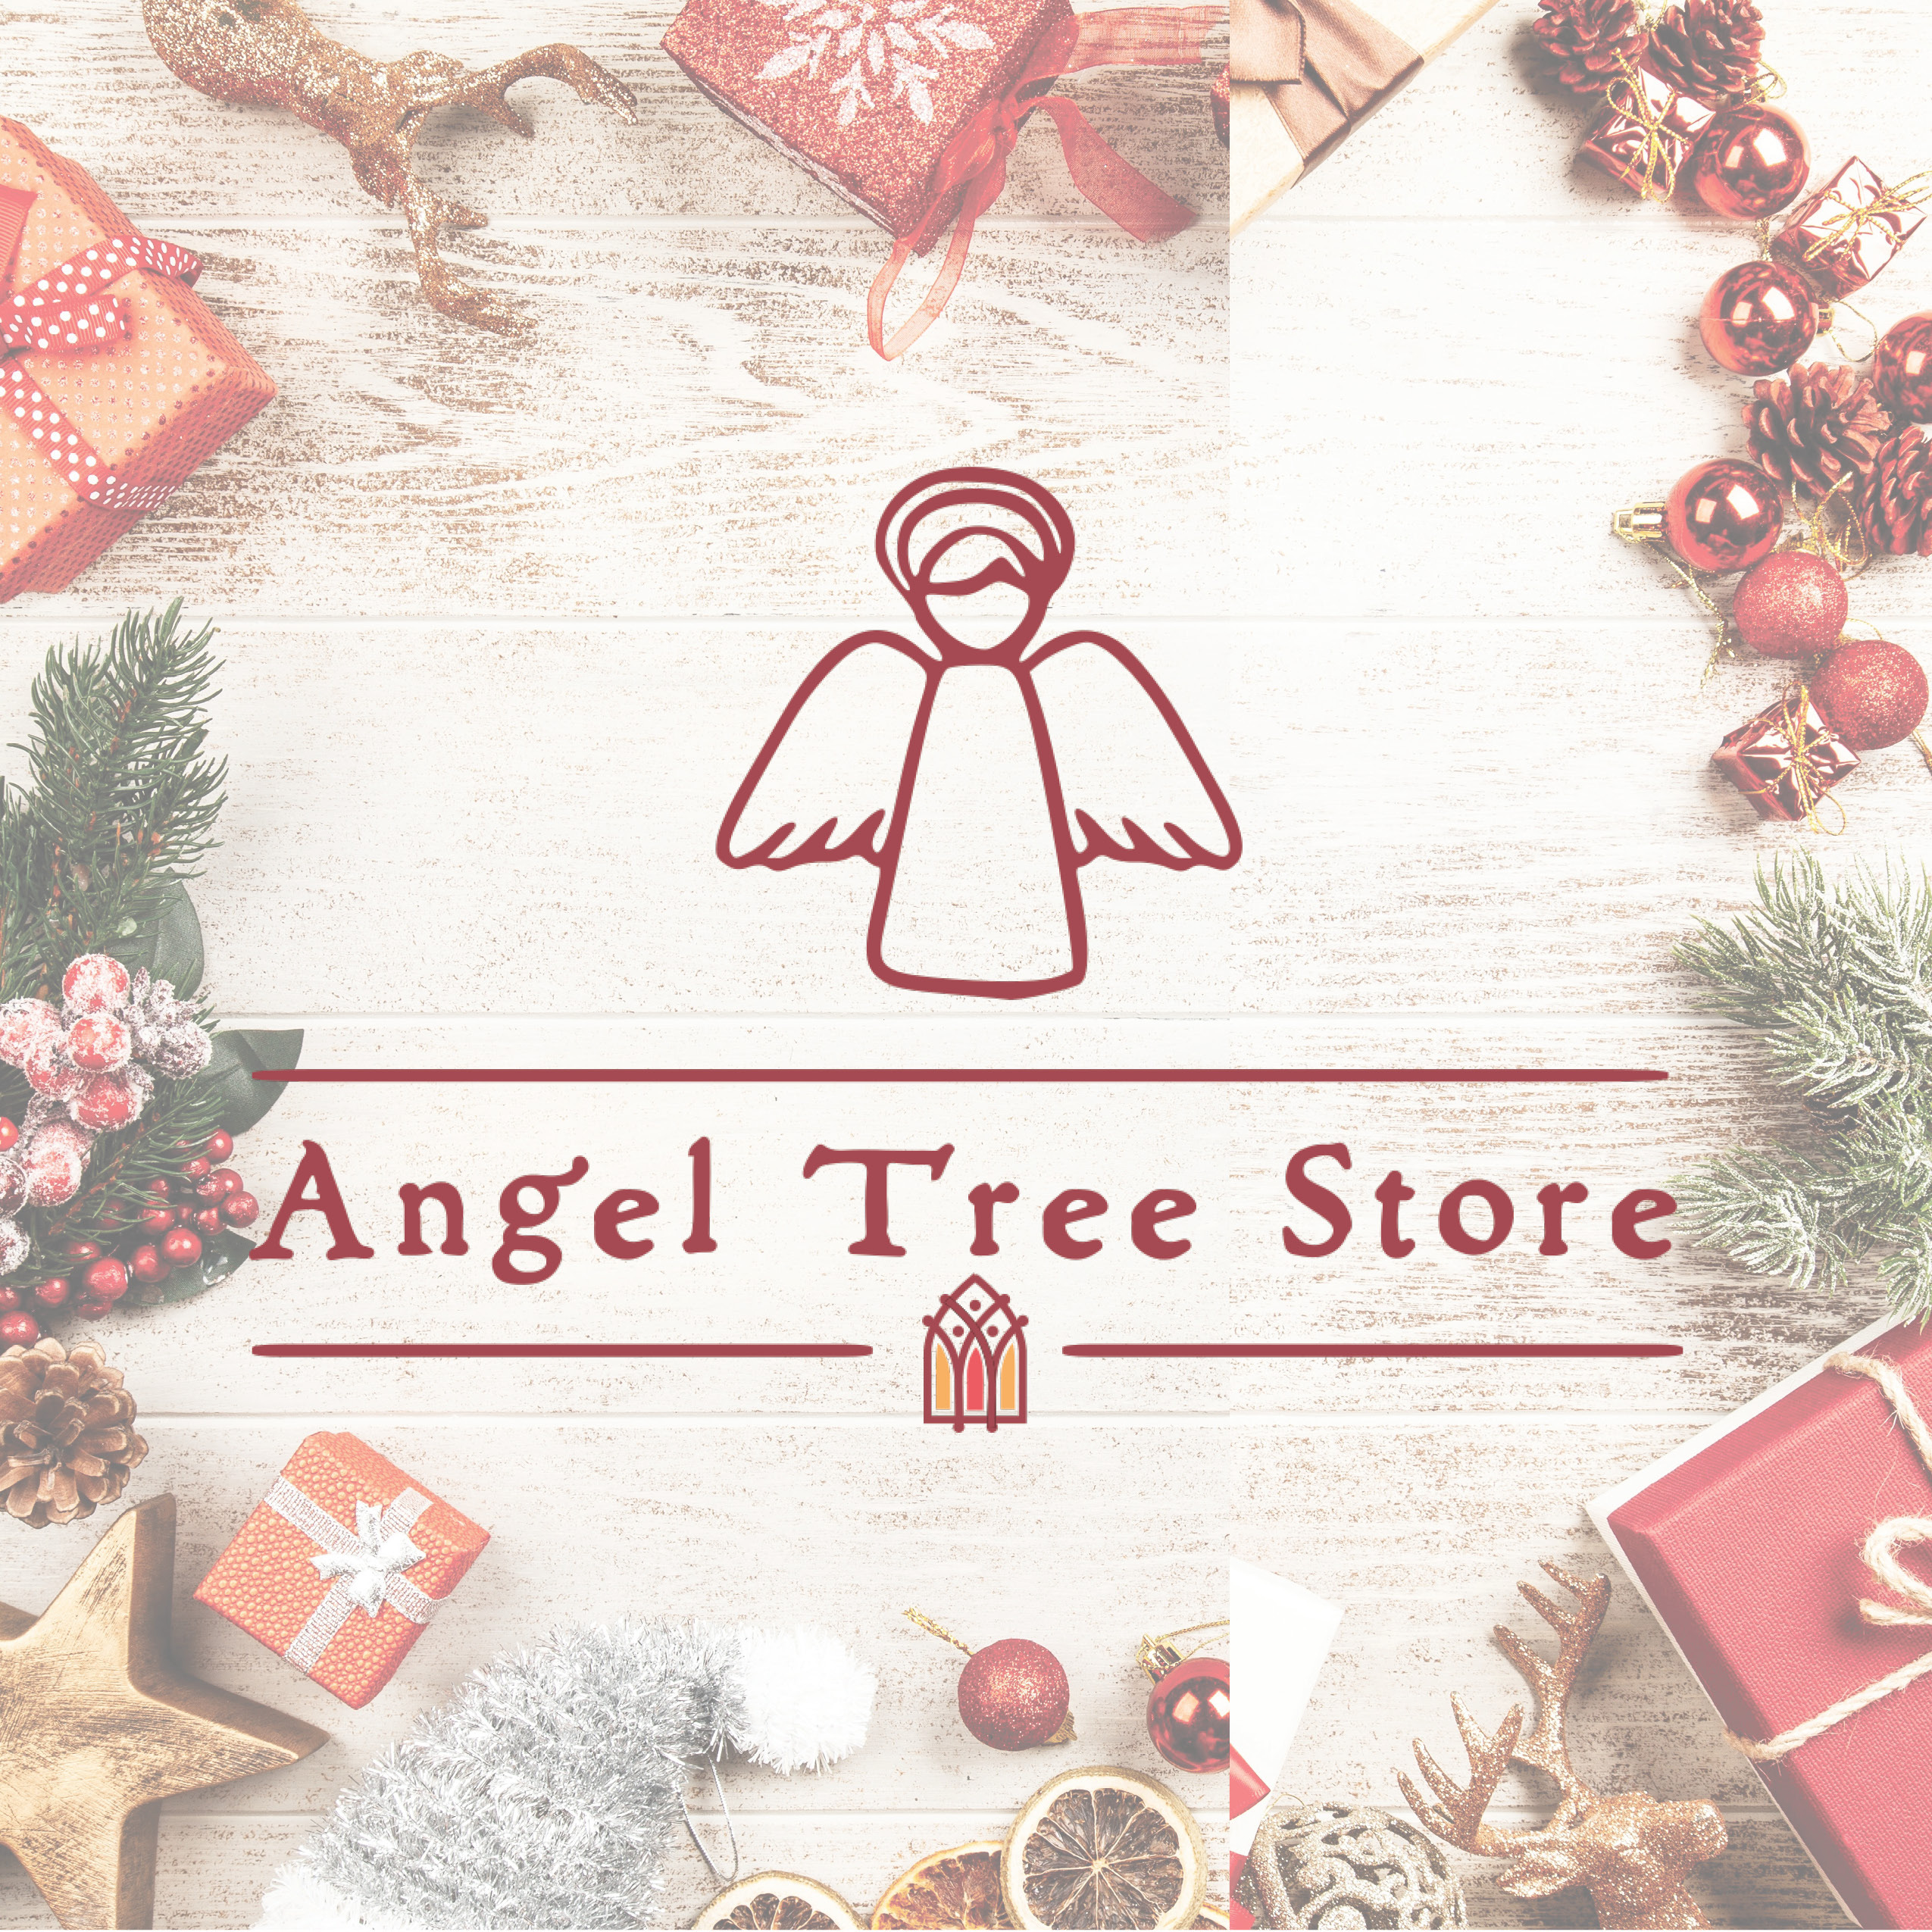 The Christ Church Angel Tree Store Returns